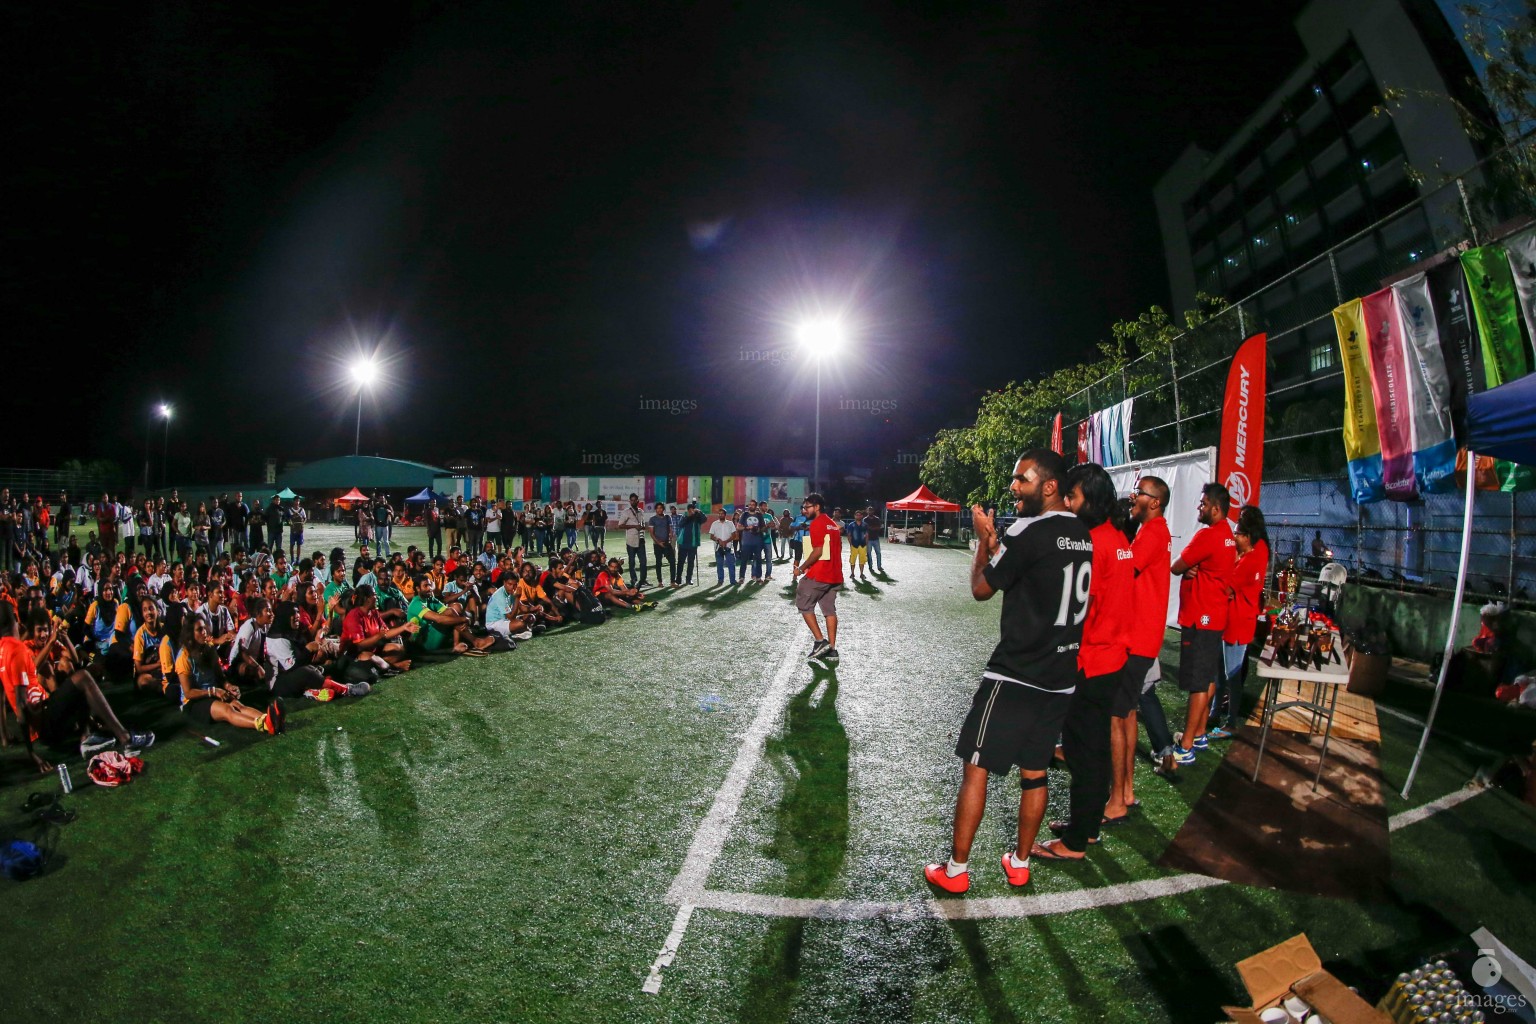 Twitsal tournament organized by twitter users of Maldivesin Male', Maldives, Friday, August. 26 , 2016. (Images.mv Photo/ Hussain Sinan).